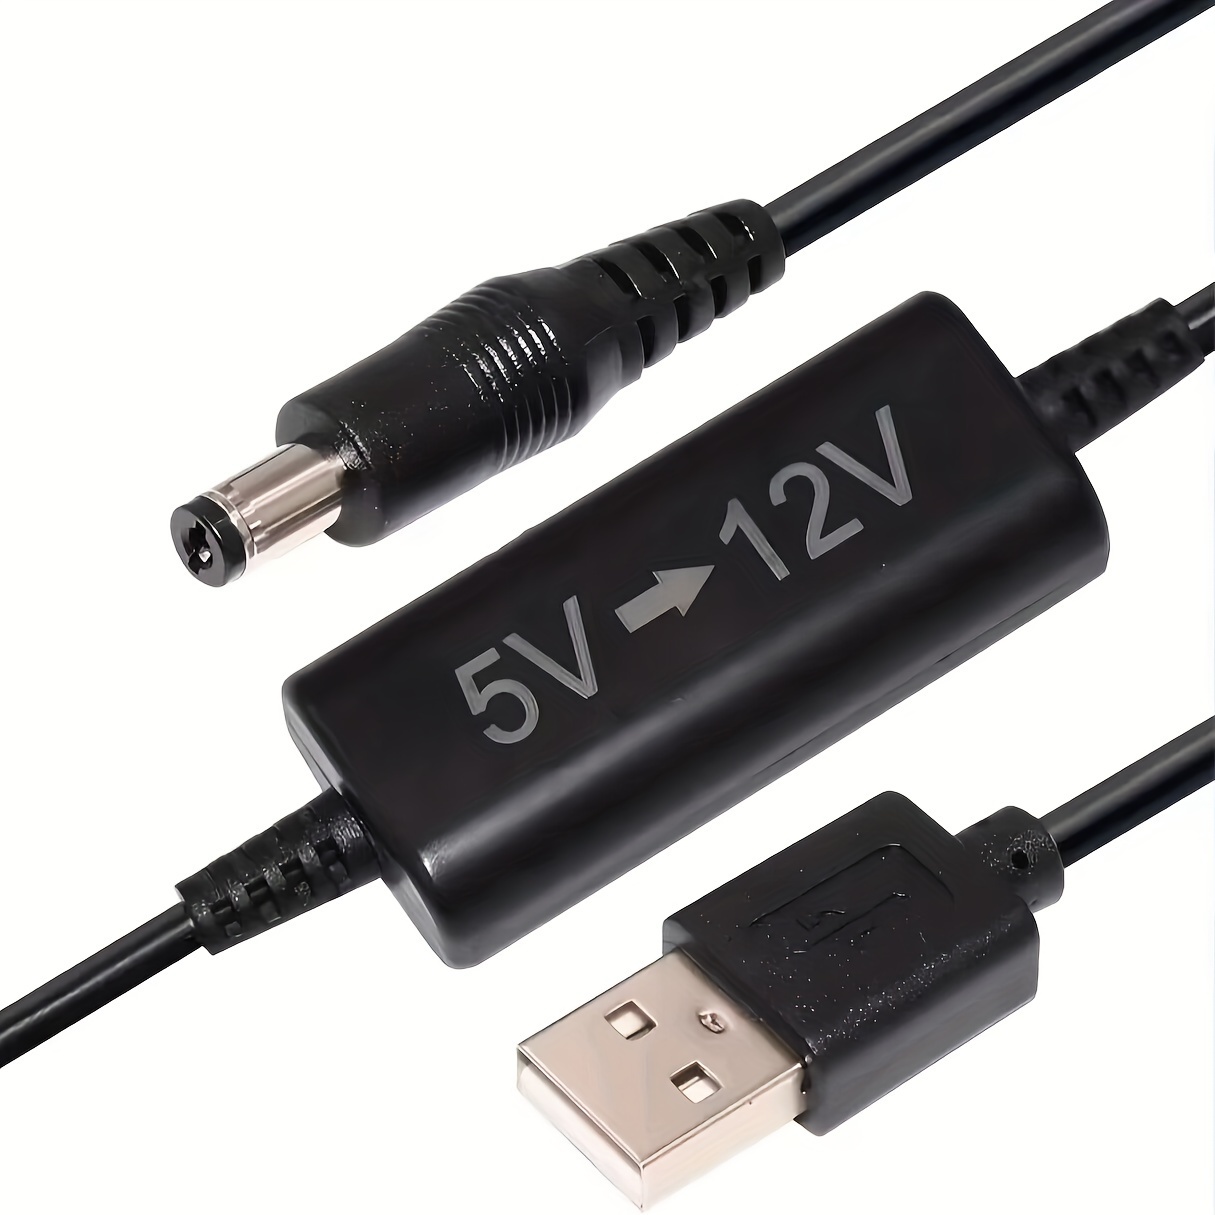 USB 5v to DC 12v - Step Up Converter Cable 